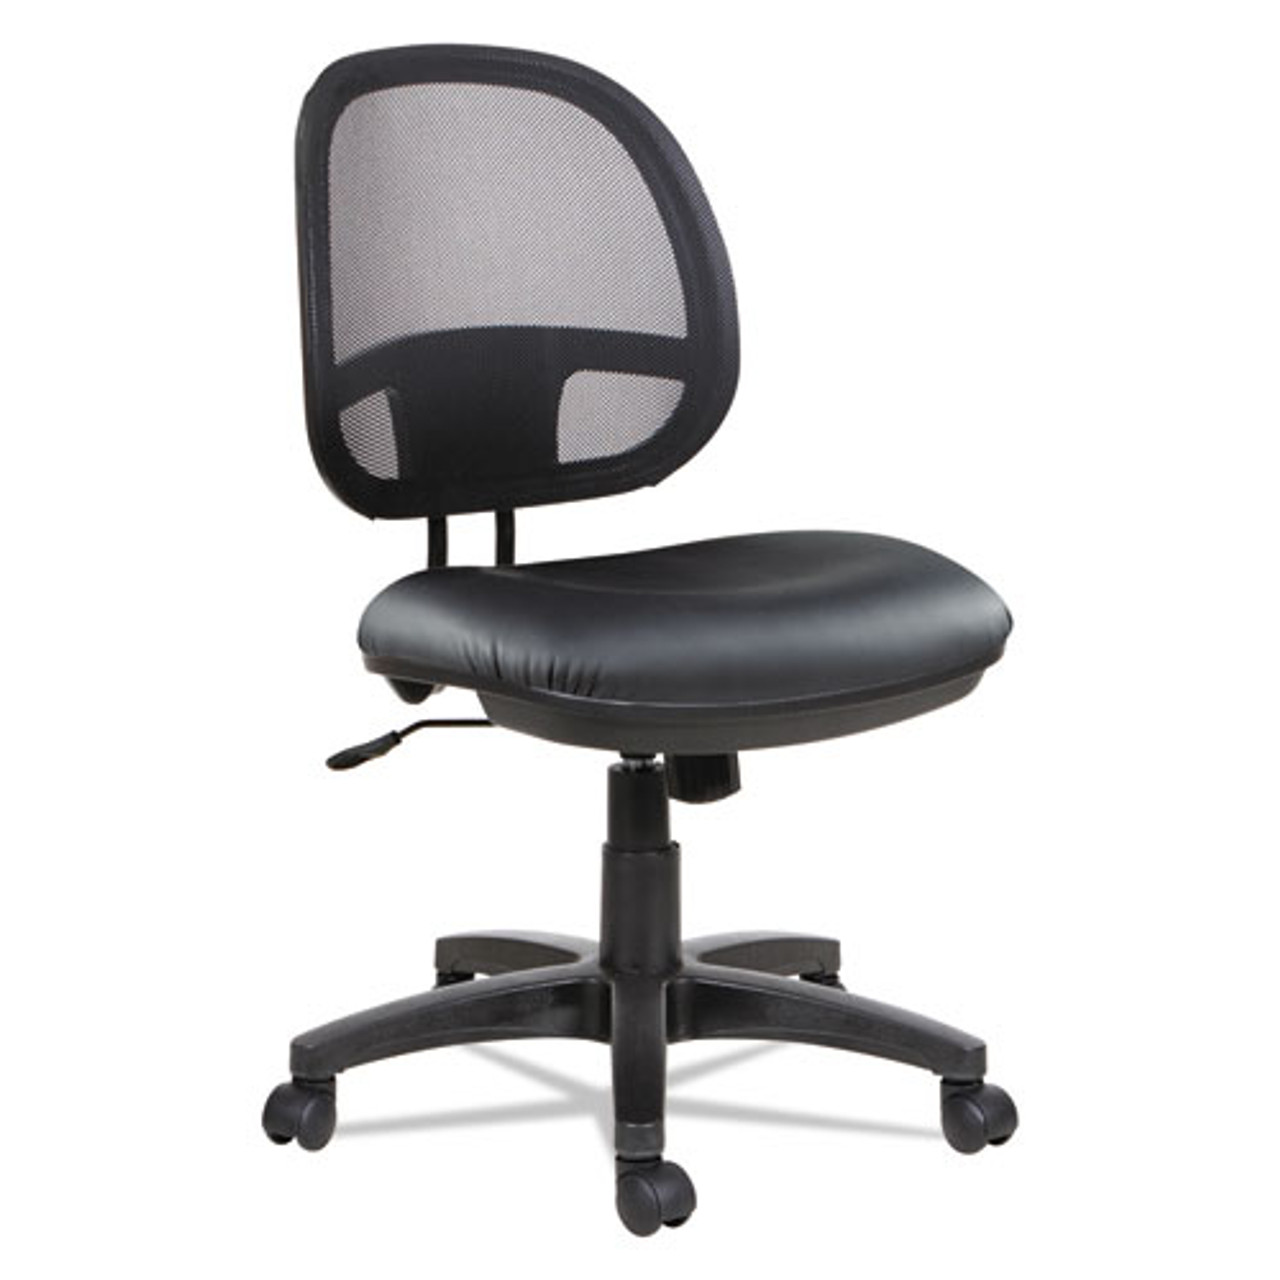 Alera Interval Series Swivel/tilt Mesh Chair, Black Leather, #AL-1134